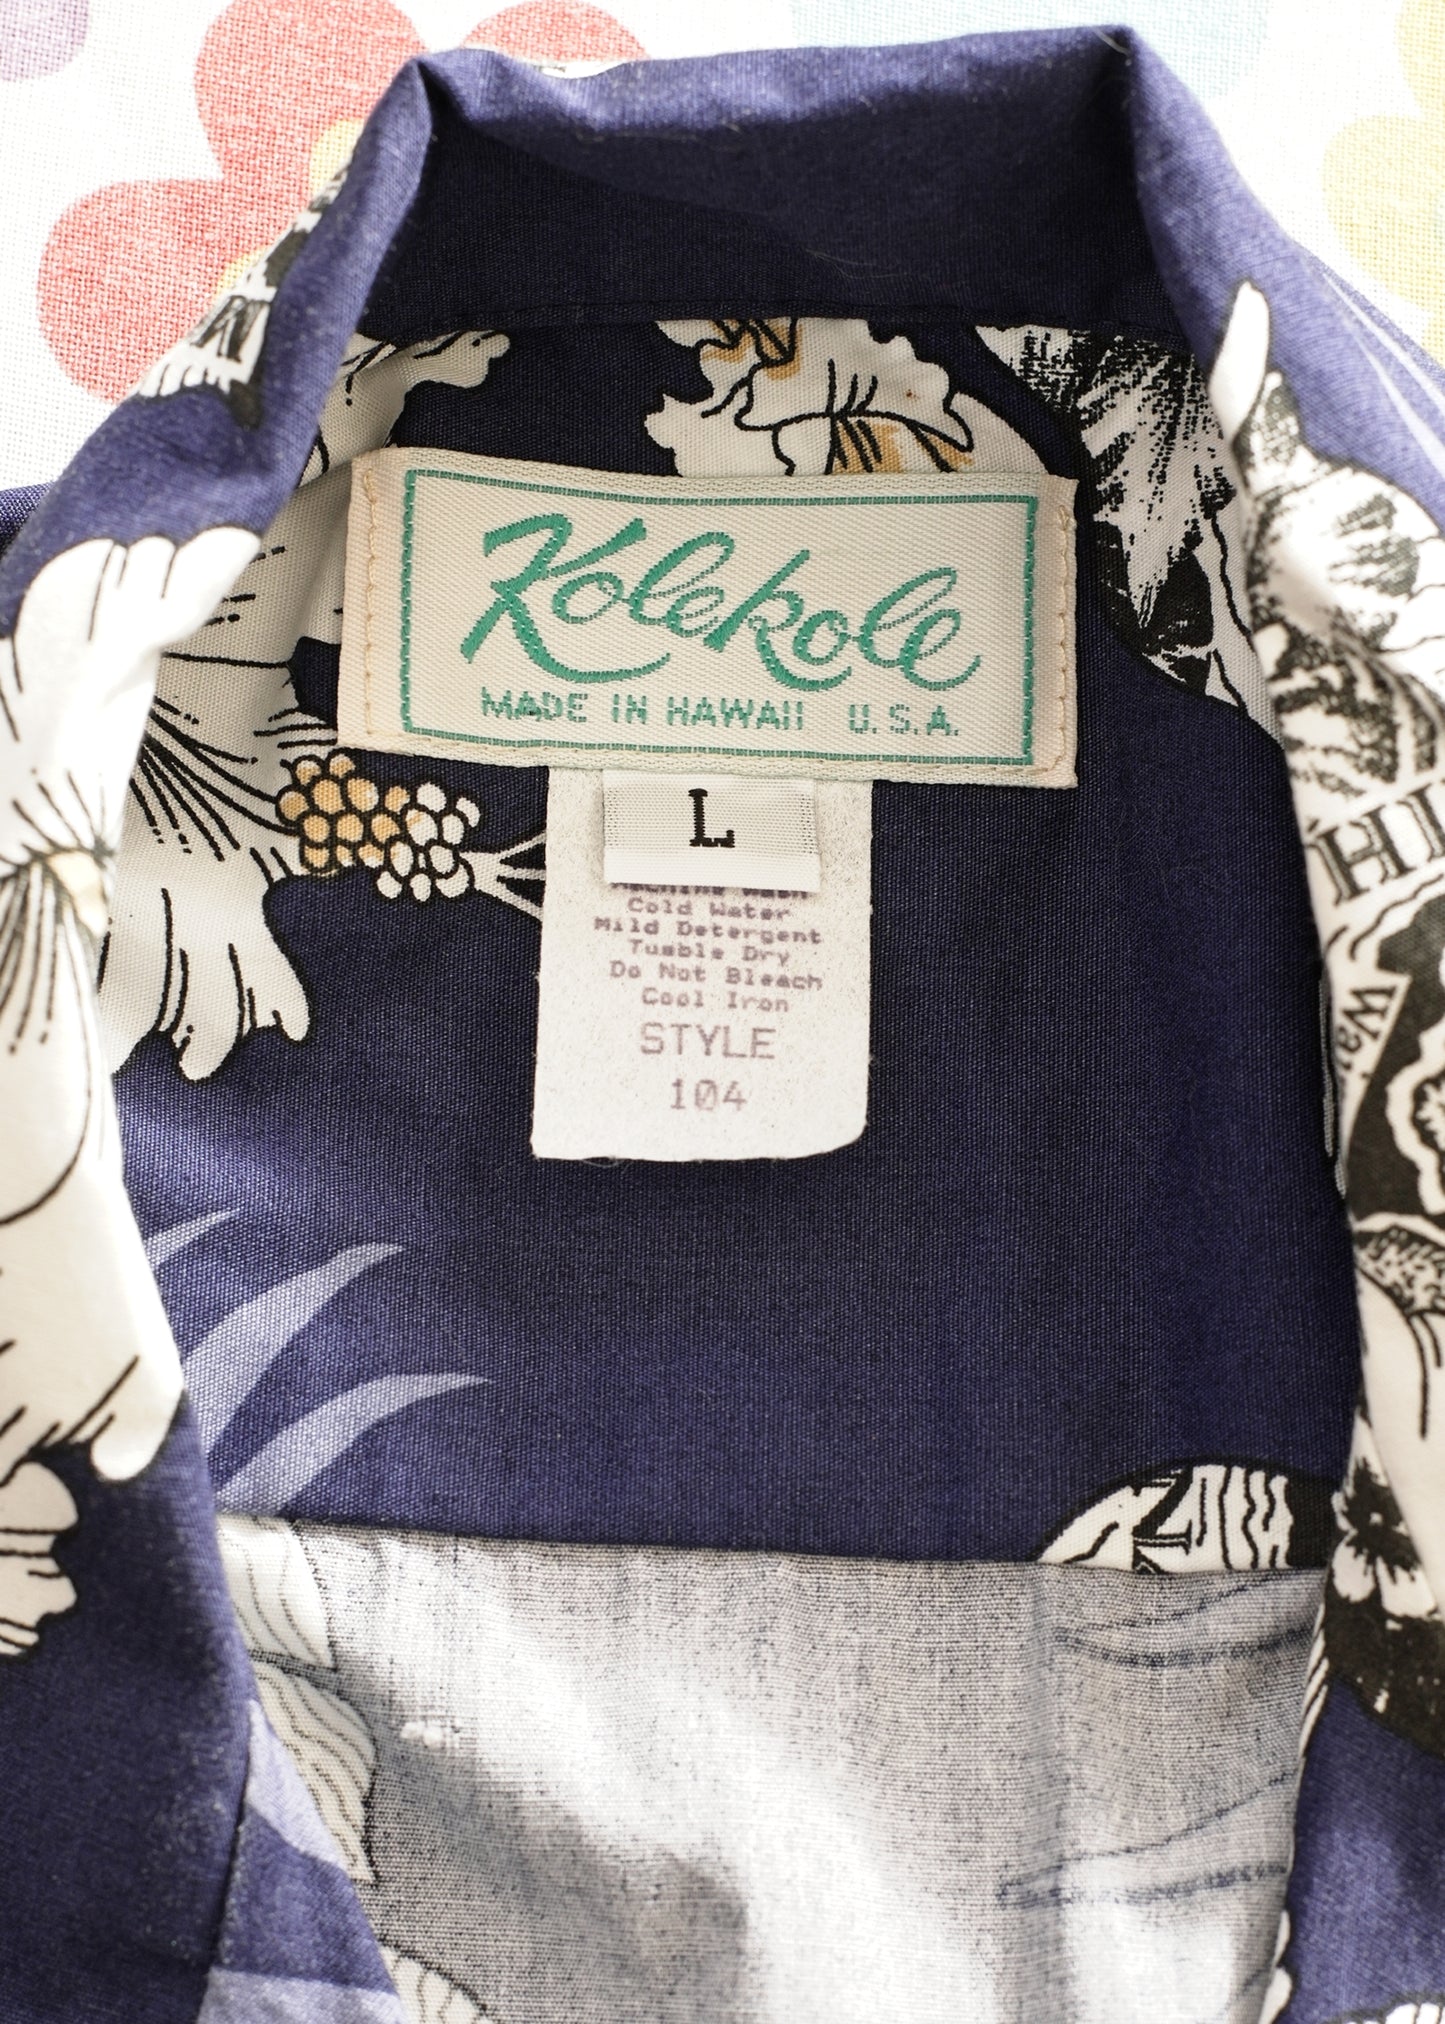 vintage hawaiian shirt made by KoleKole, Hawaii. Large fit